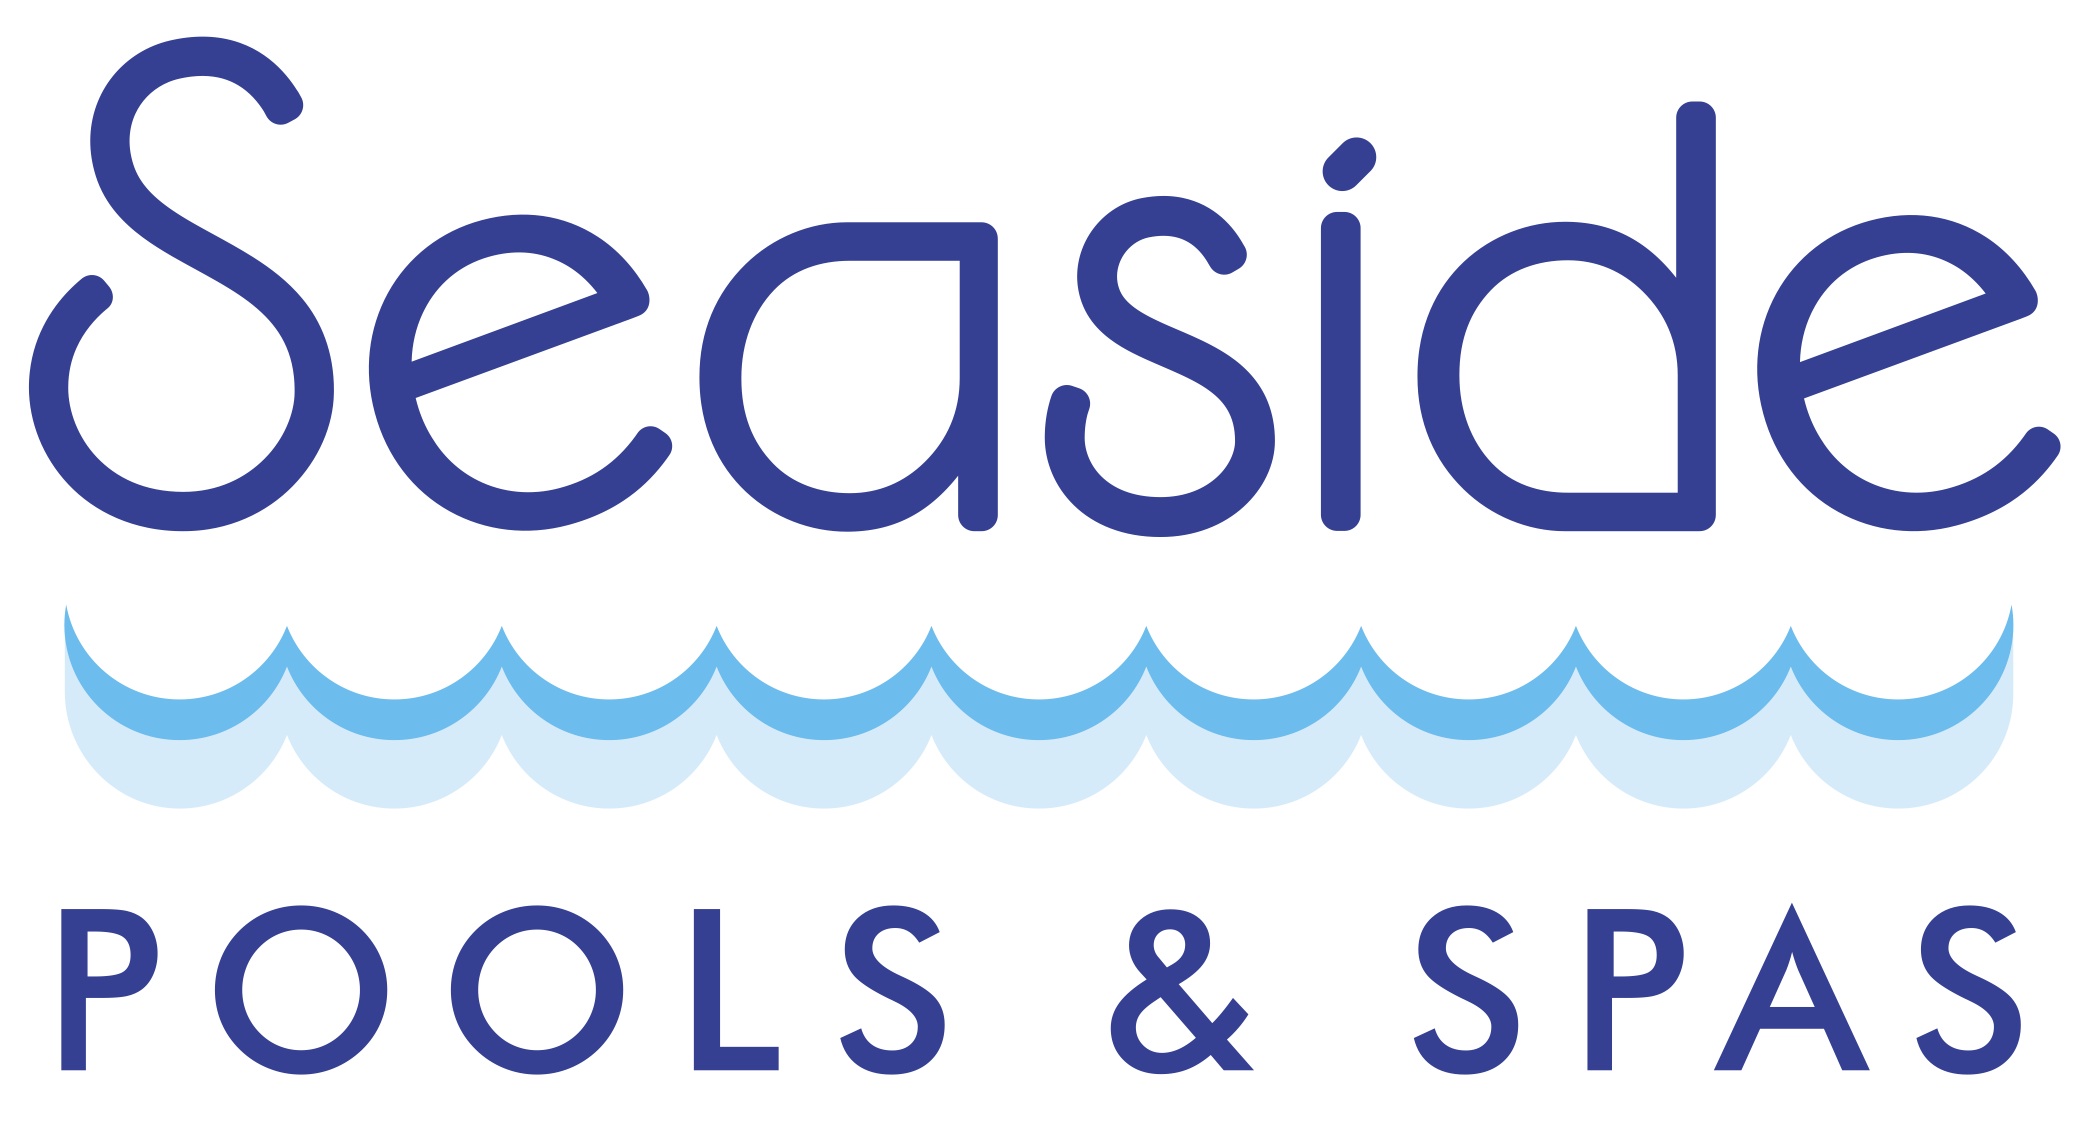 Seaside Pools, Inc. Logo